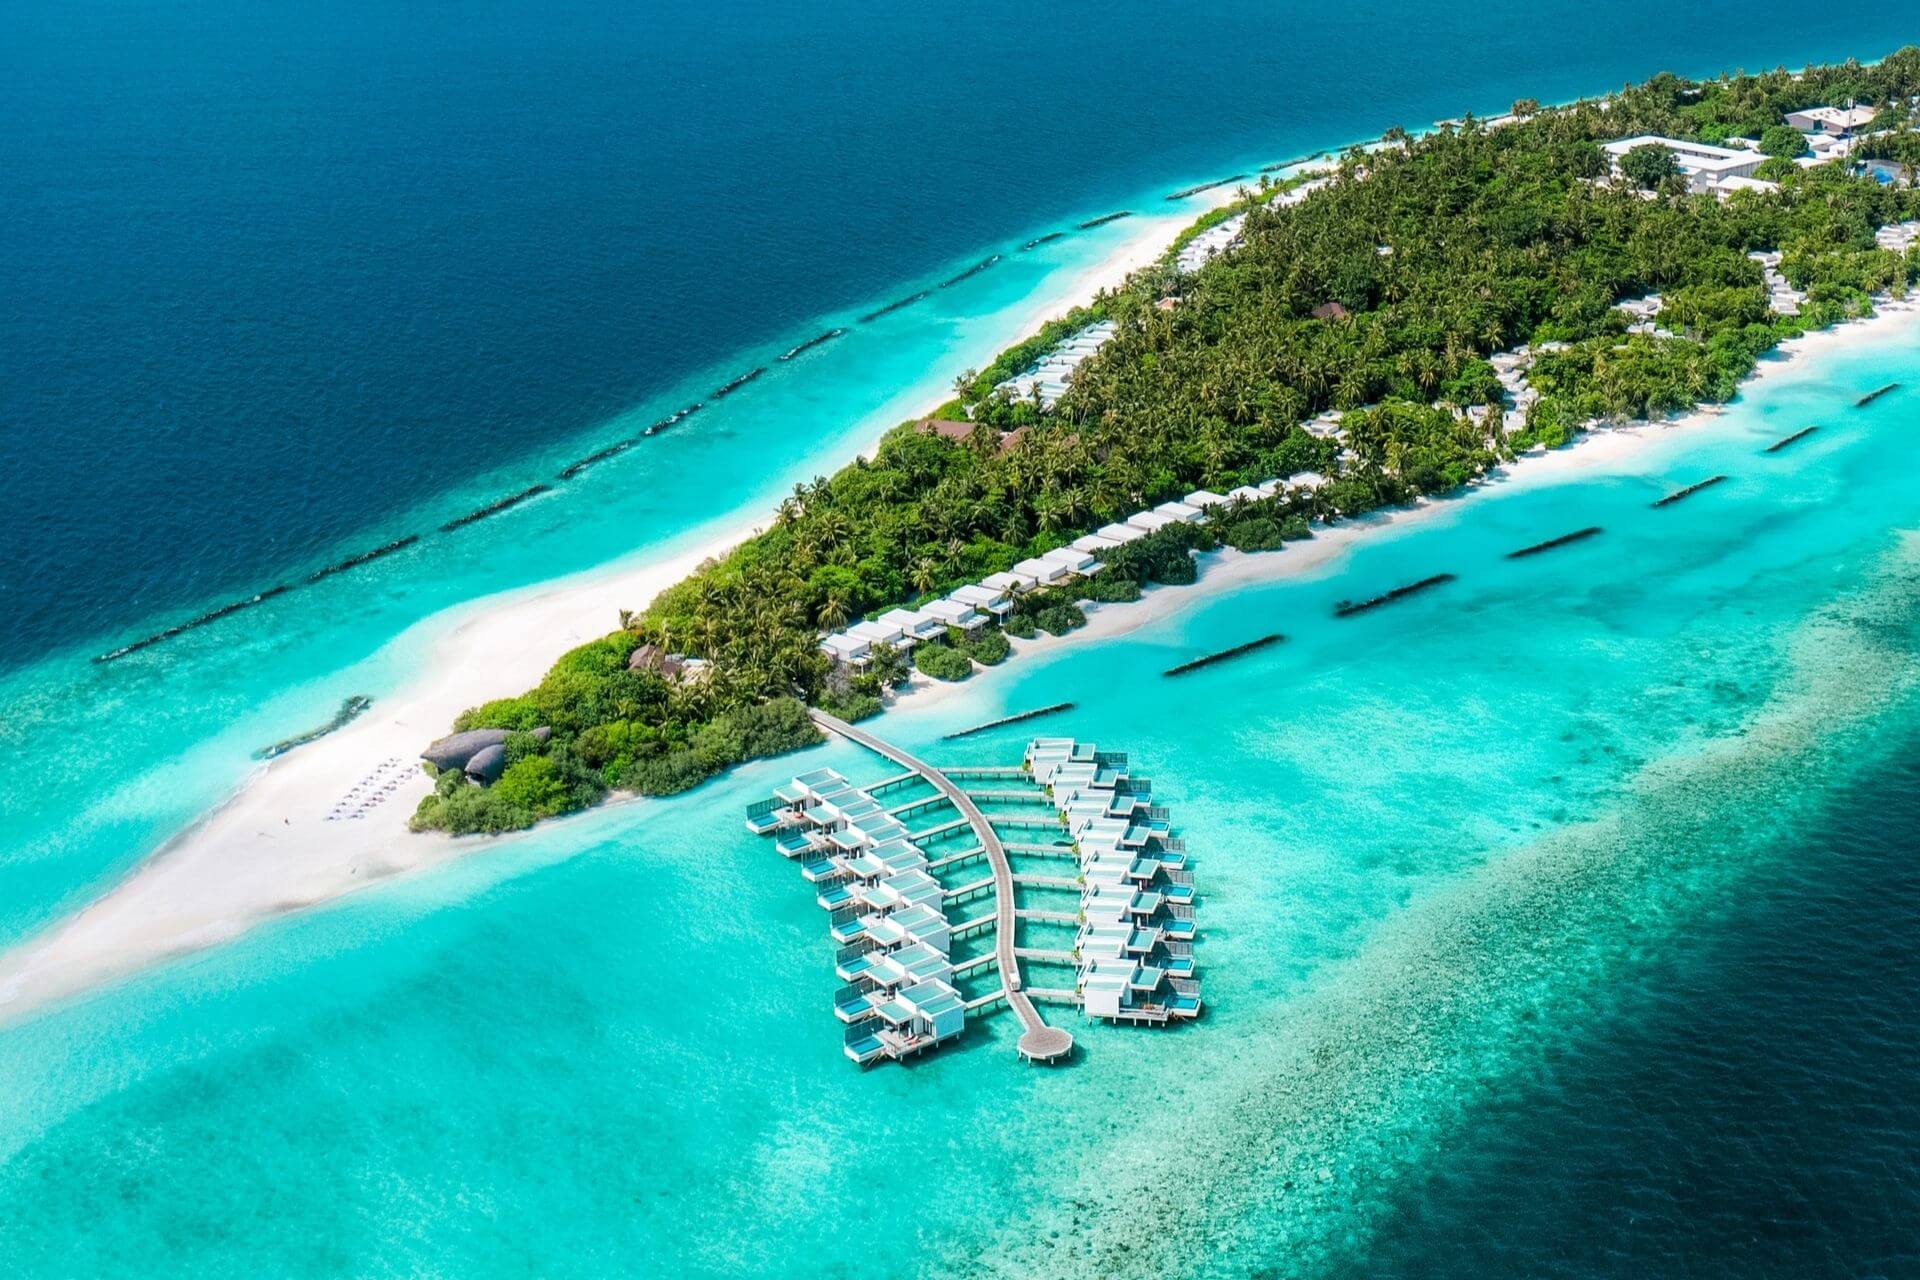 maldives tour package 3 days 2 nights from mumbai